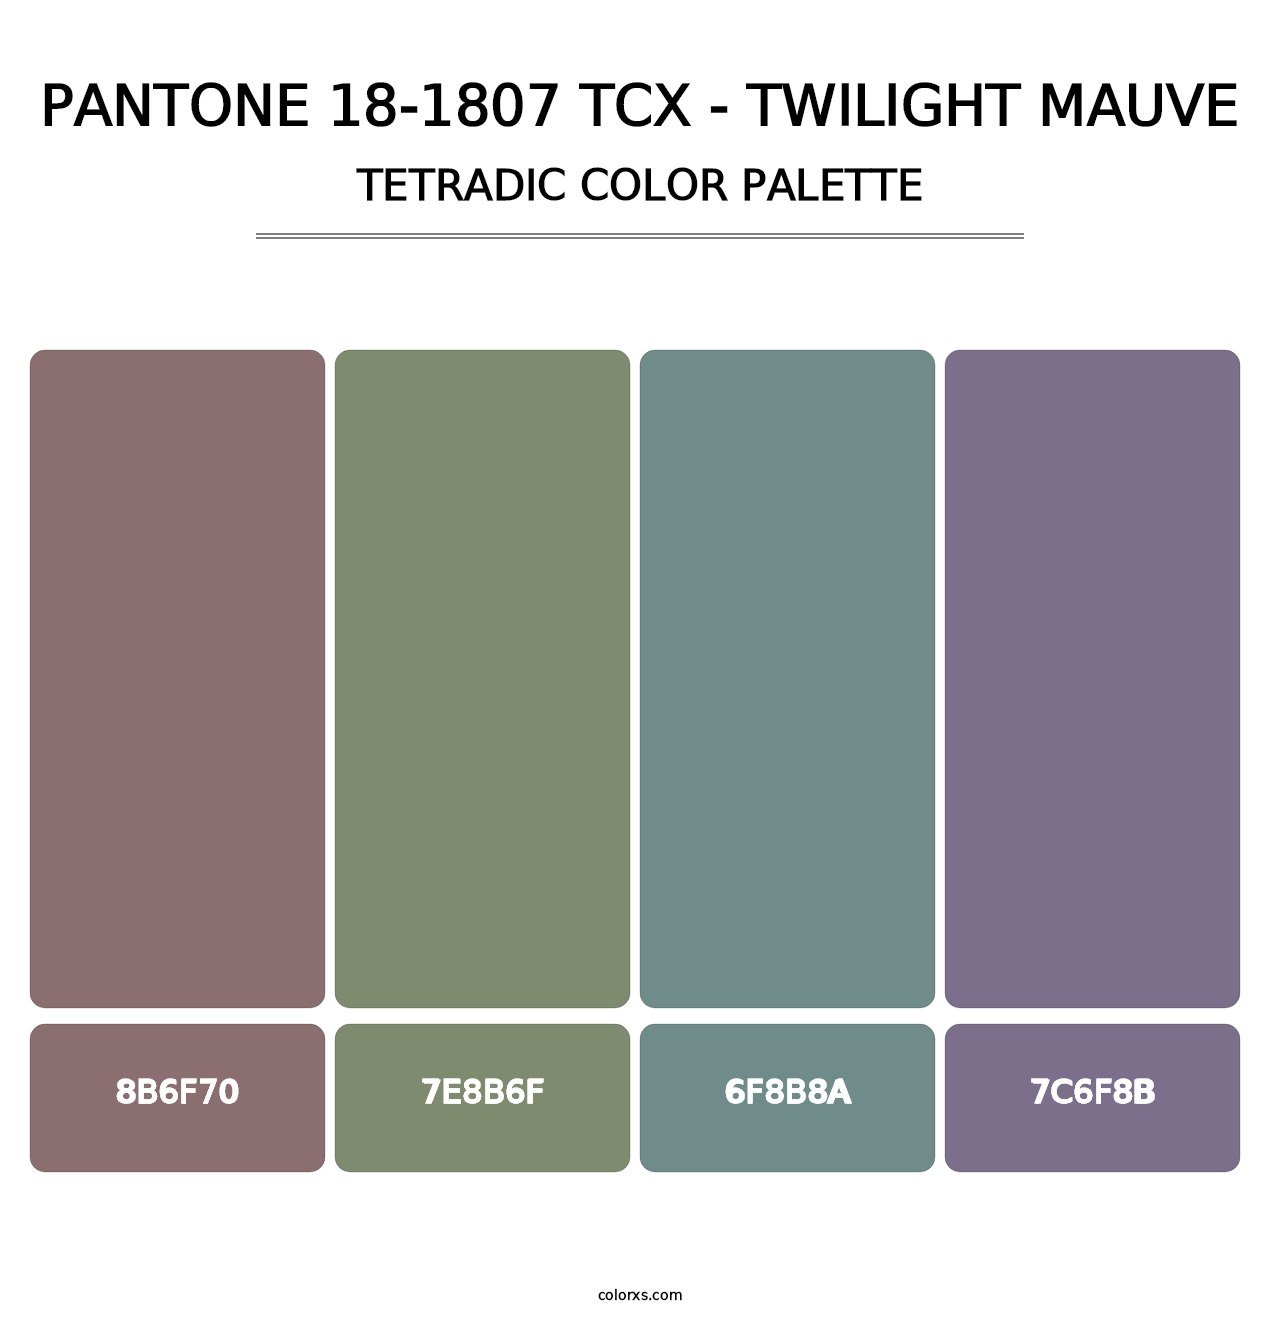 PANTONE 18-1807 TCX - Twilight Mauve - Tetradic Color Palette